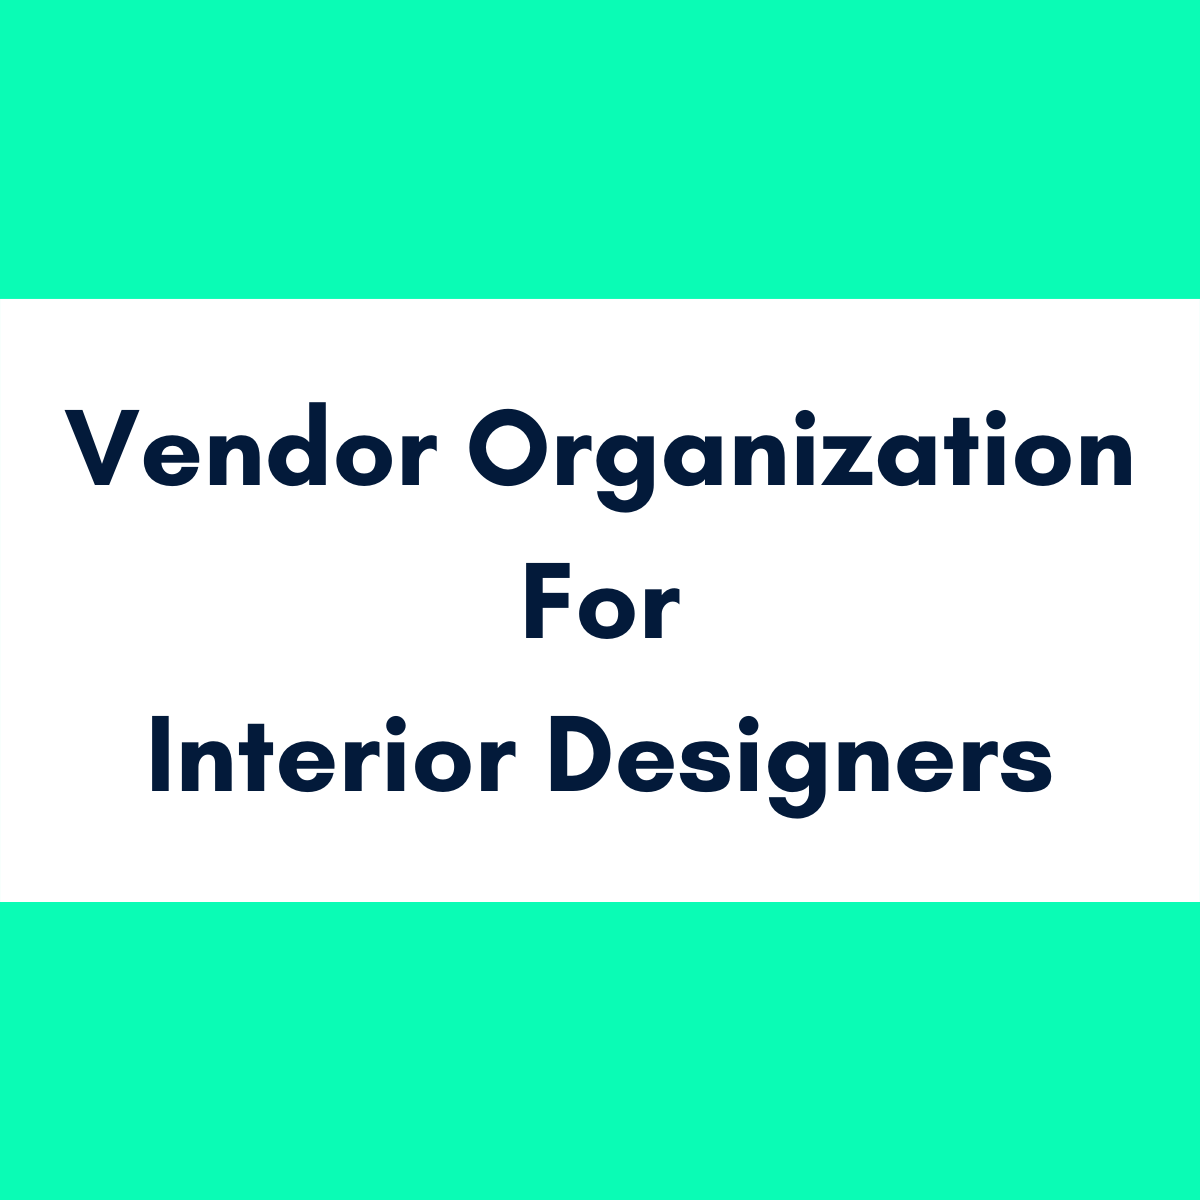 Vendor Organization for Interior Designers